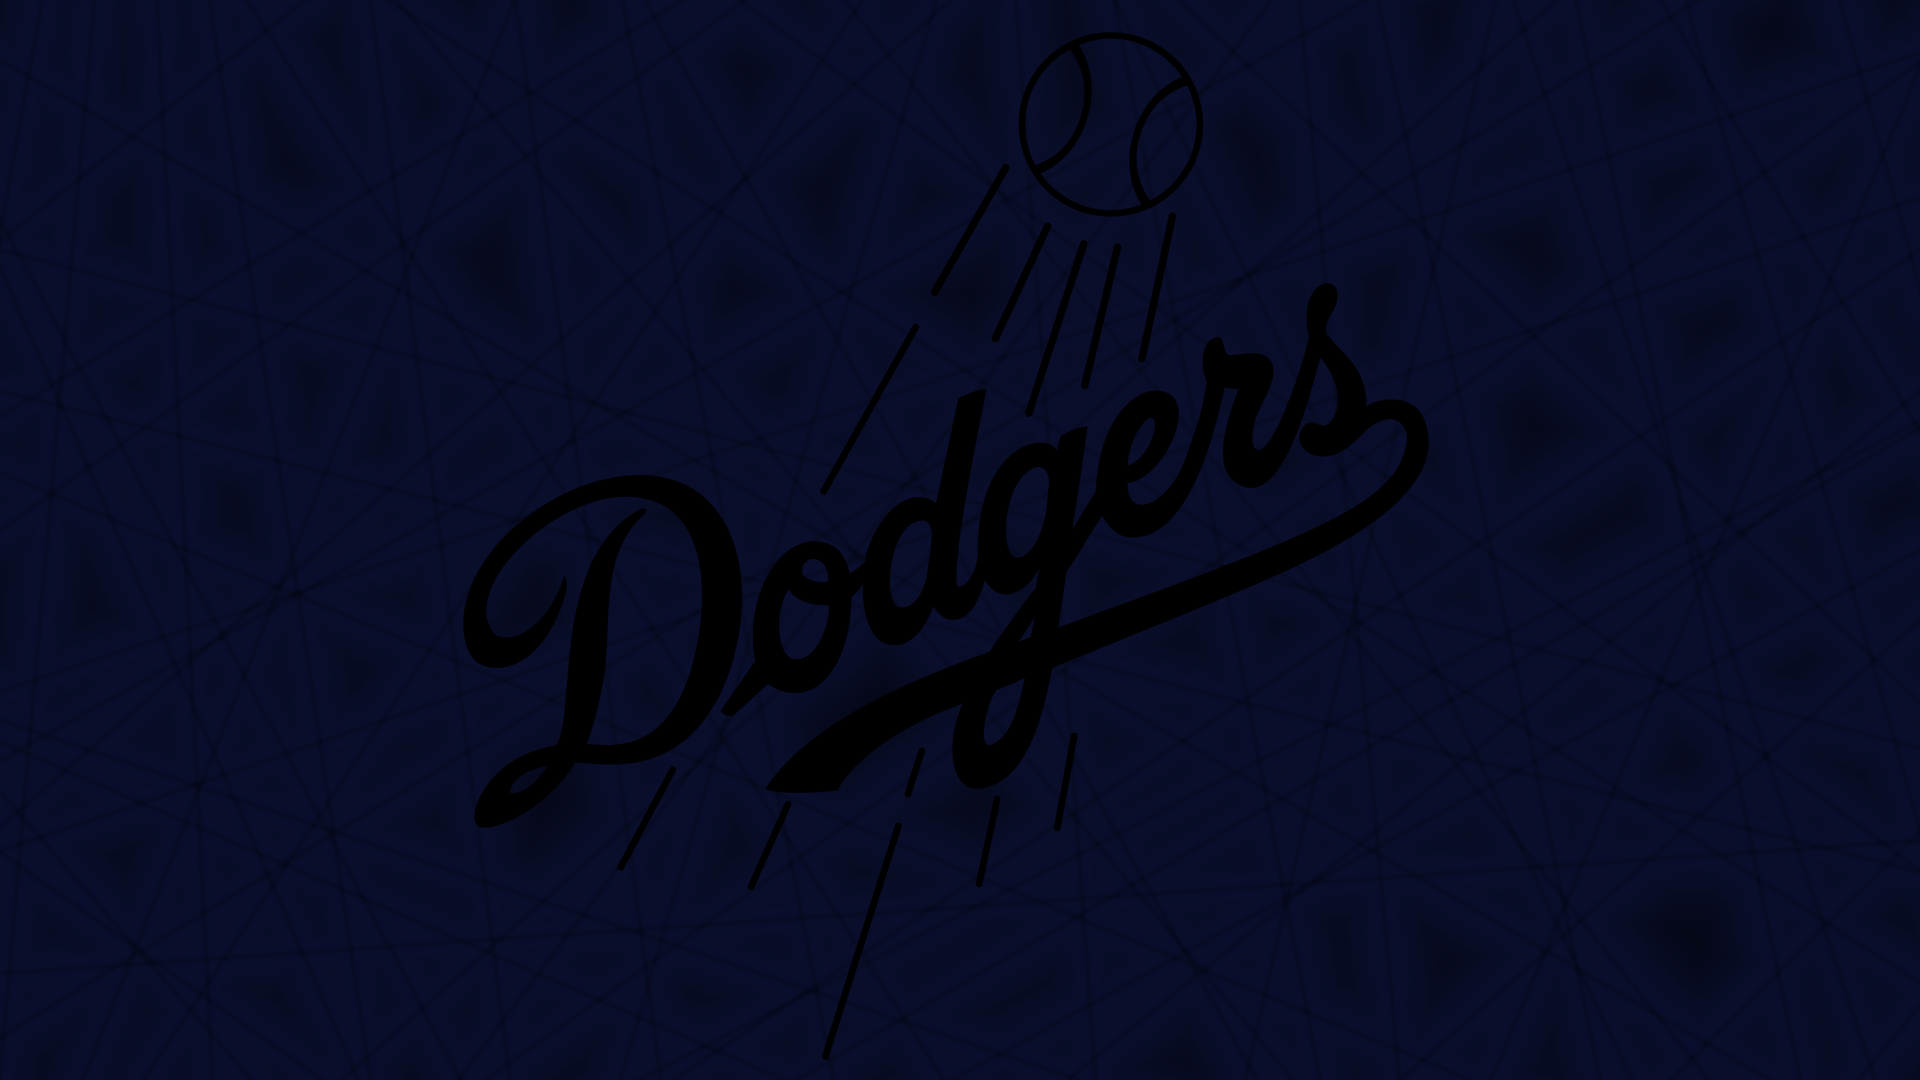 Los Angeles Dodgers Wallpaper 50292 1920x1080 px